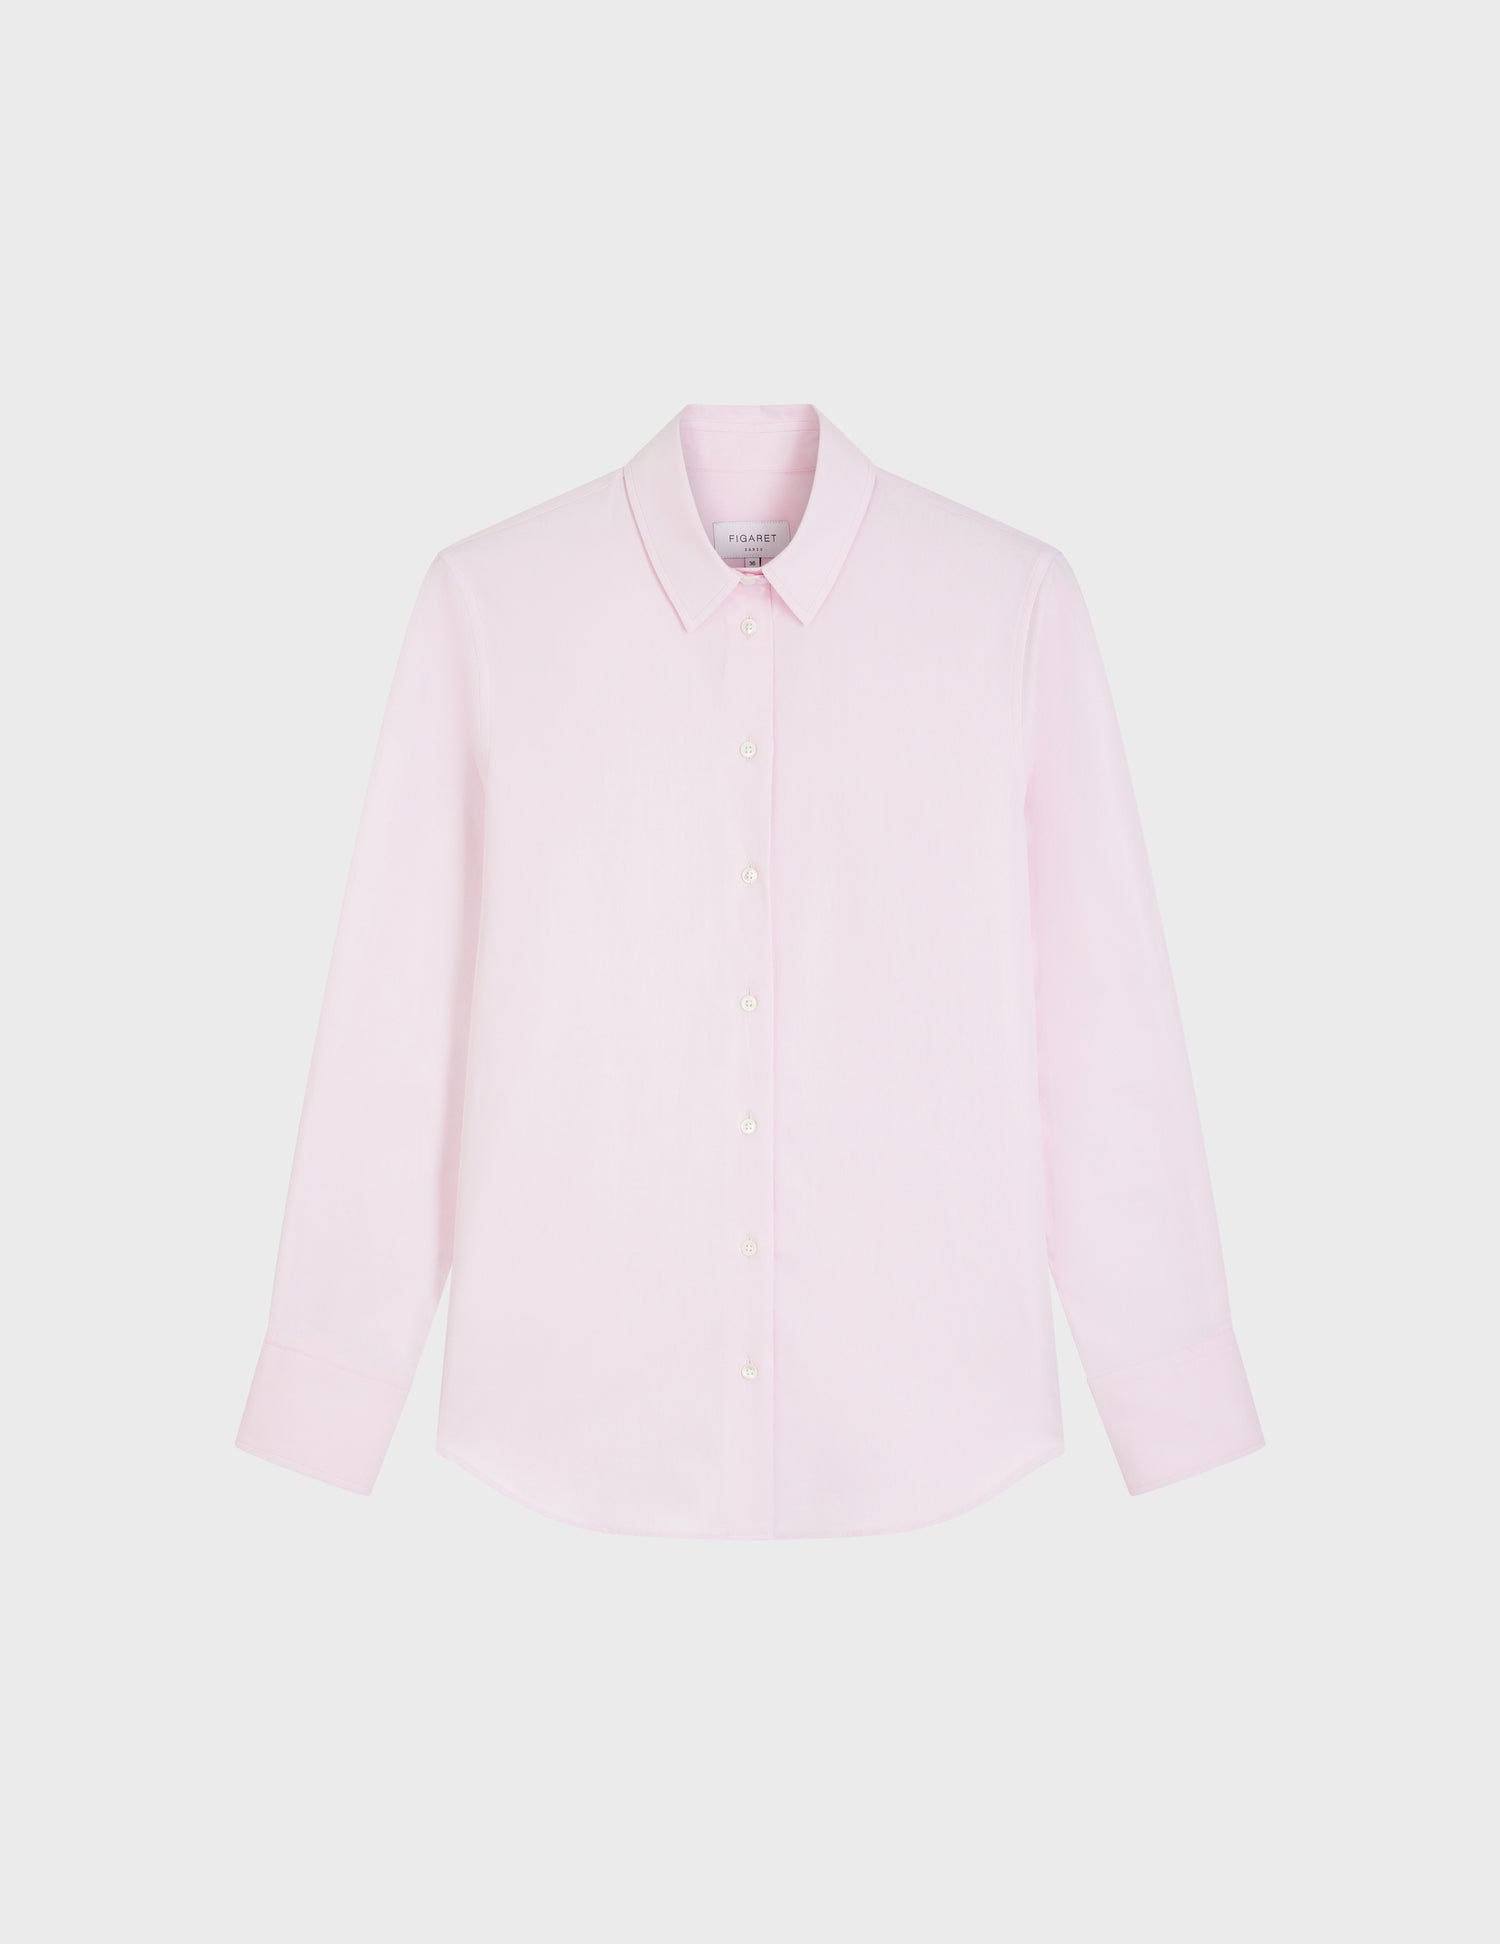 Pink Marion shirt - Pinpoint#4